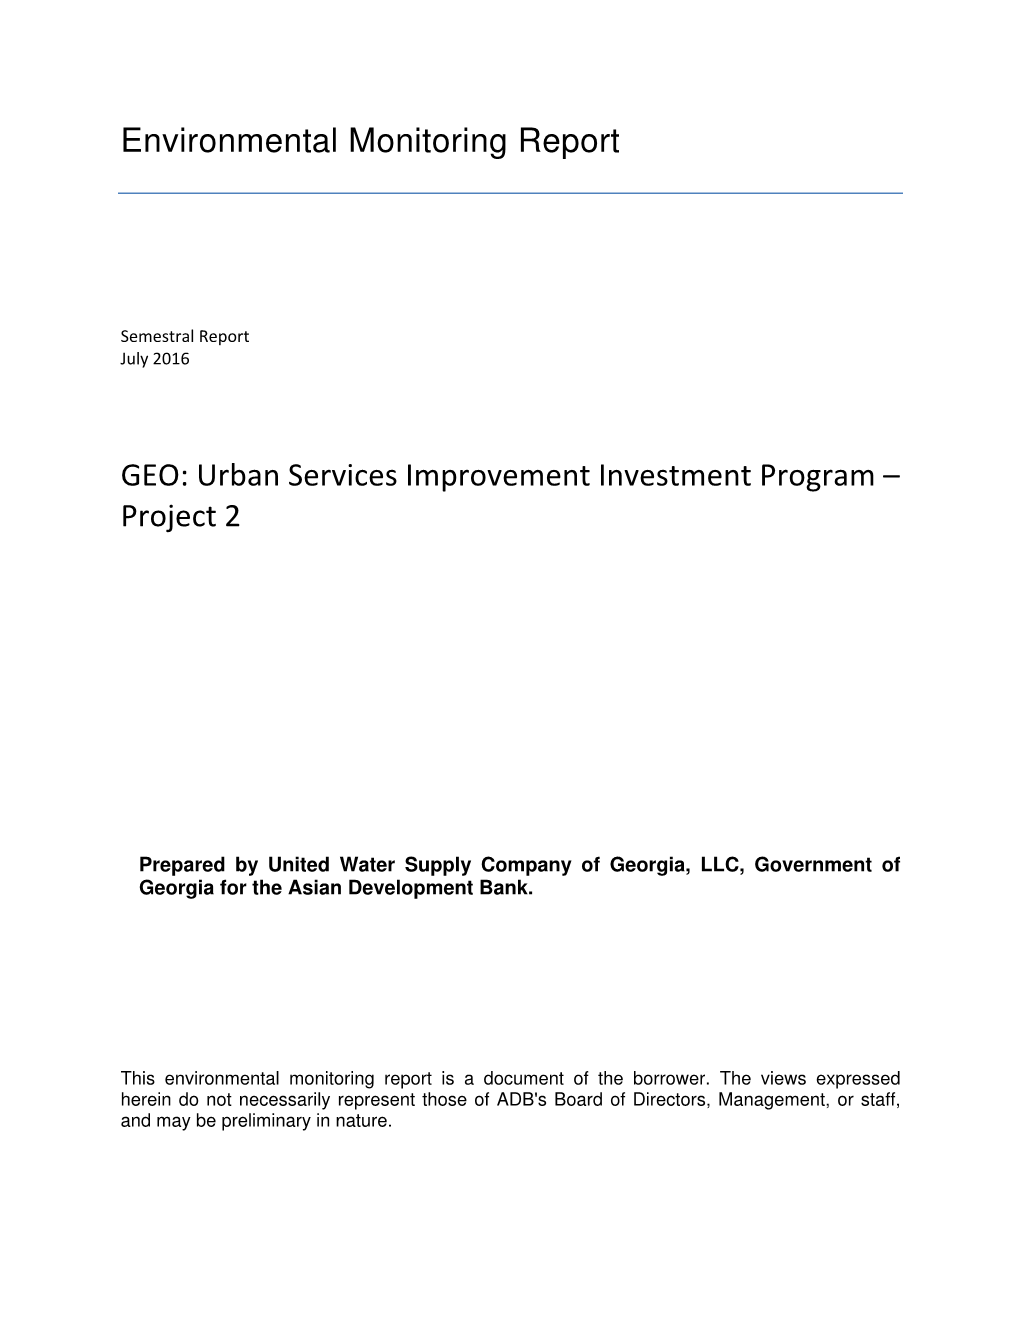 Environmental Monitoring Report GEO: Urban Services Improvement Investment Program – Project 2